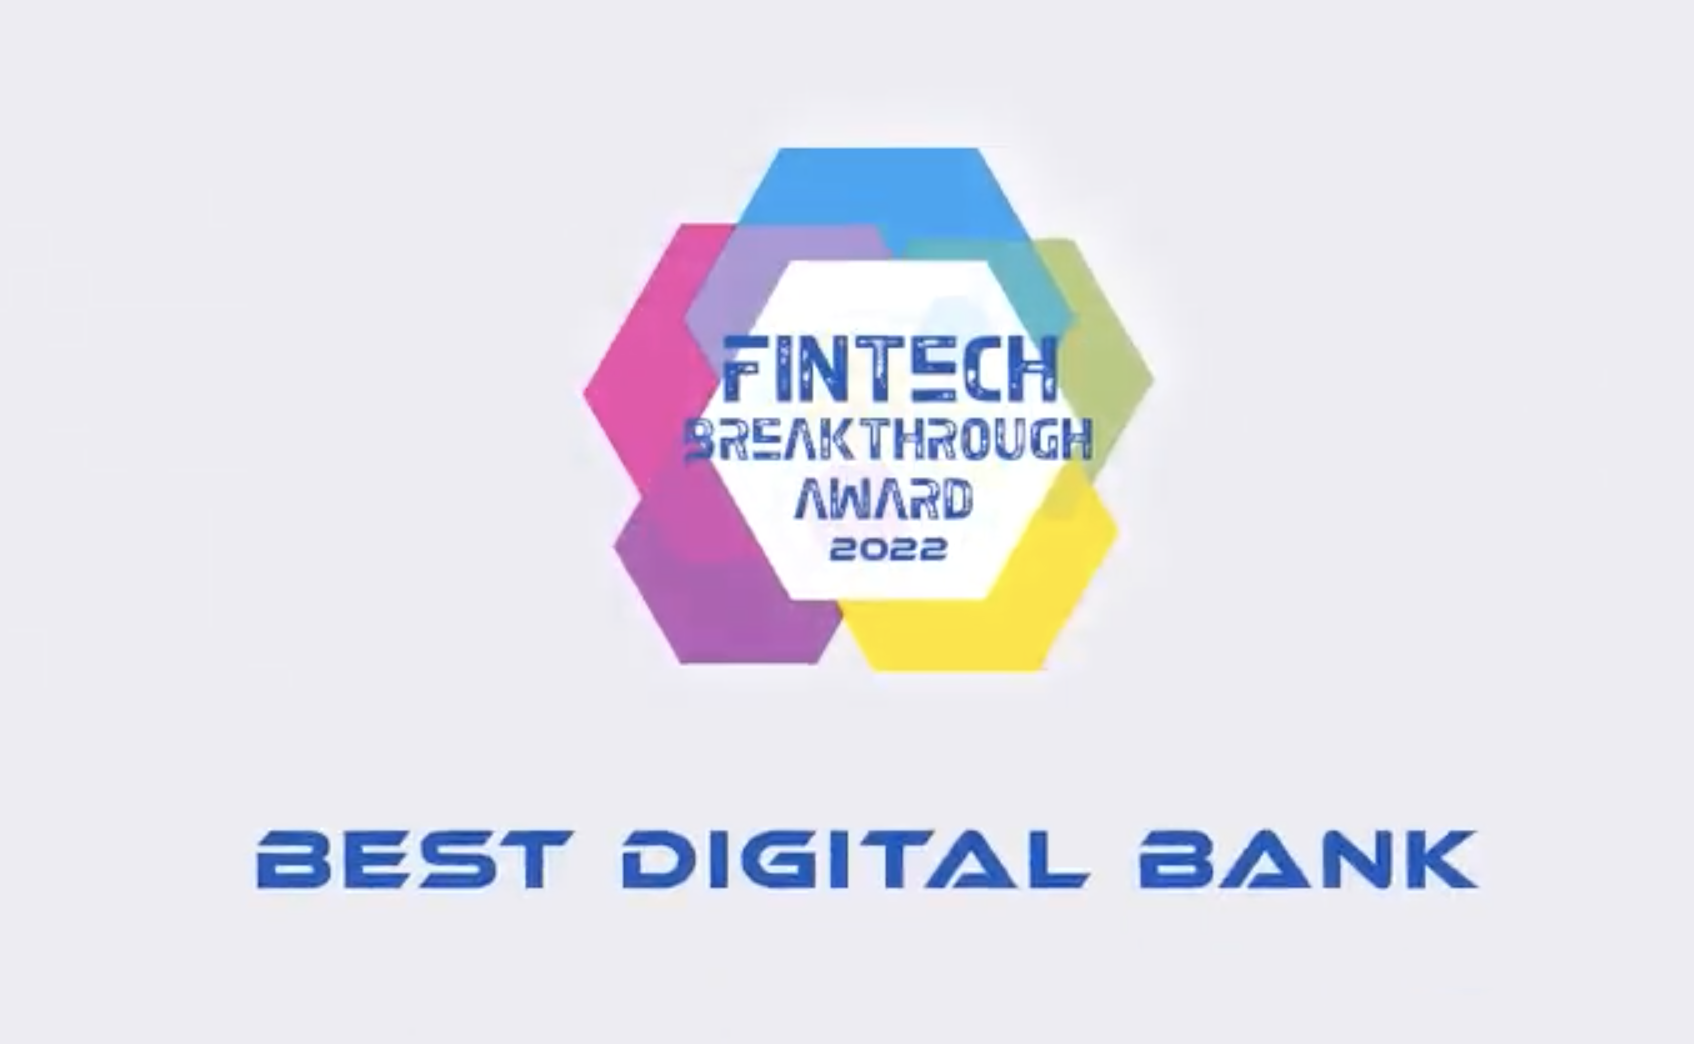 bunq crowned the Best Digital Bank at FinTech Breakthrough Awards